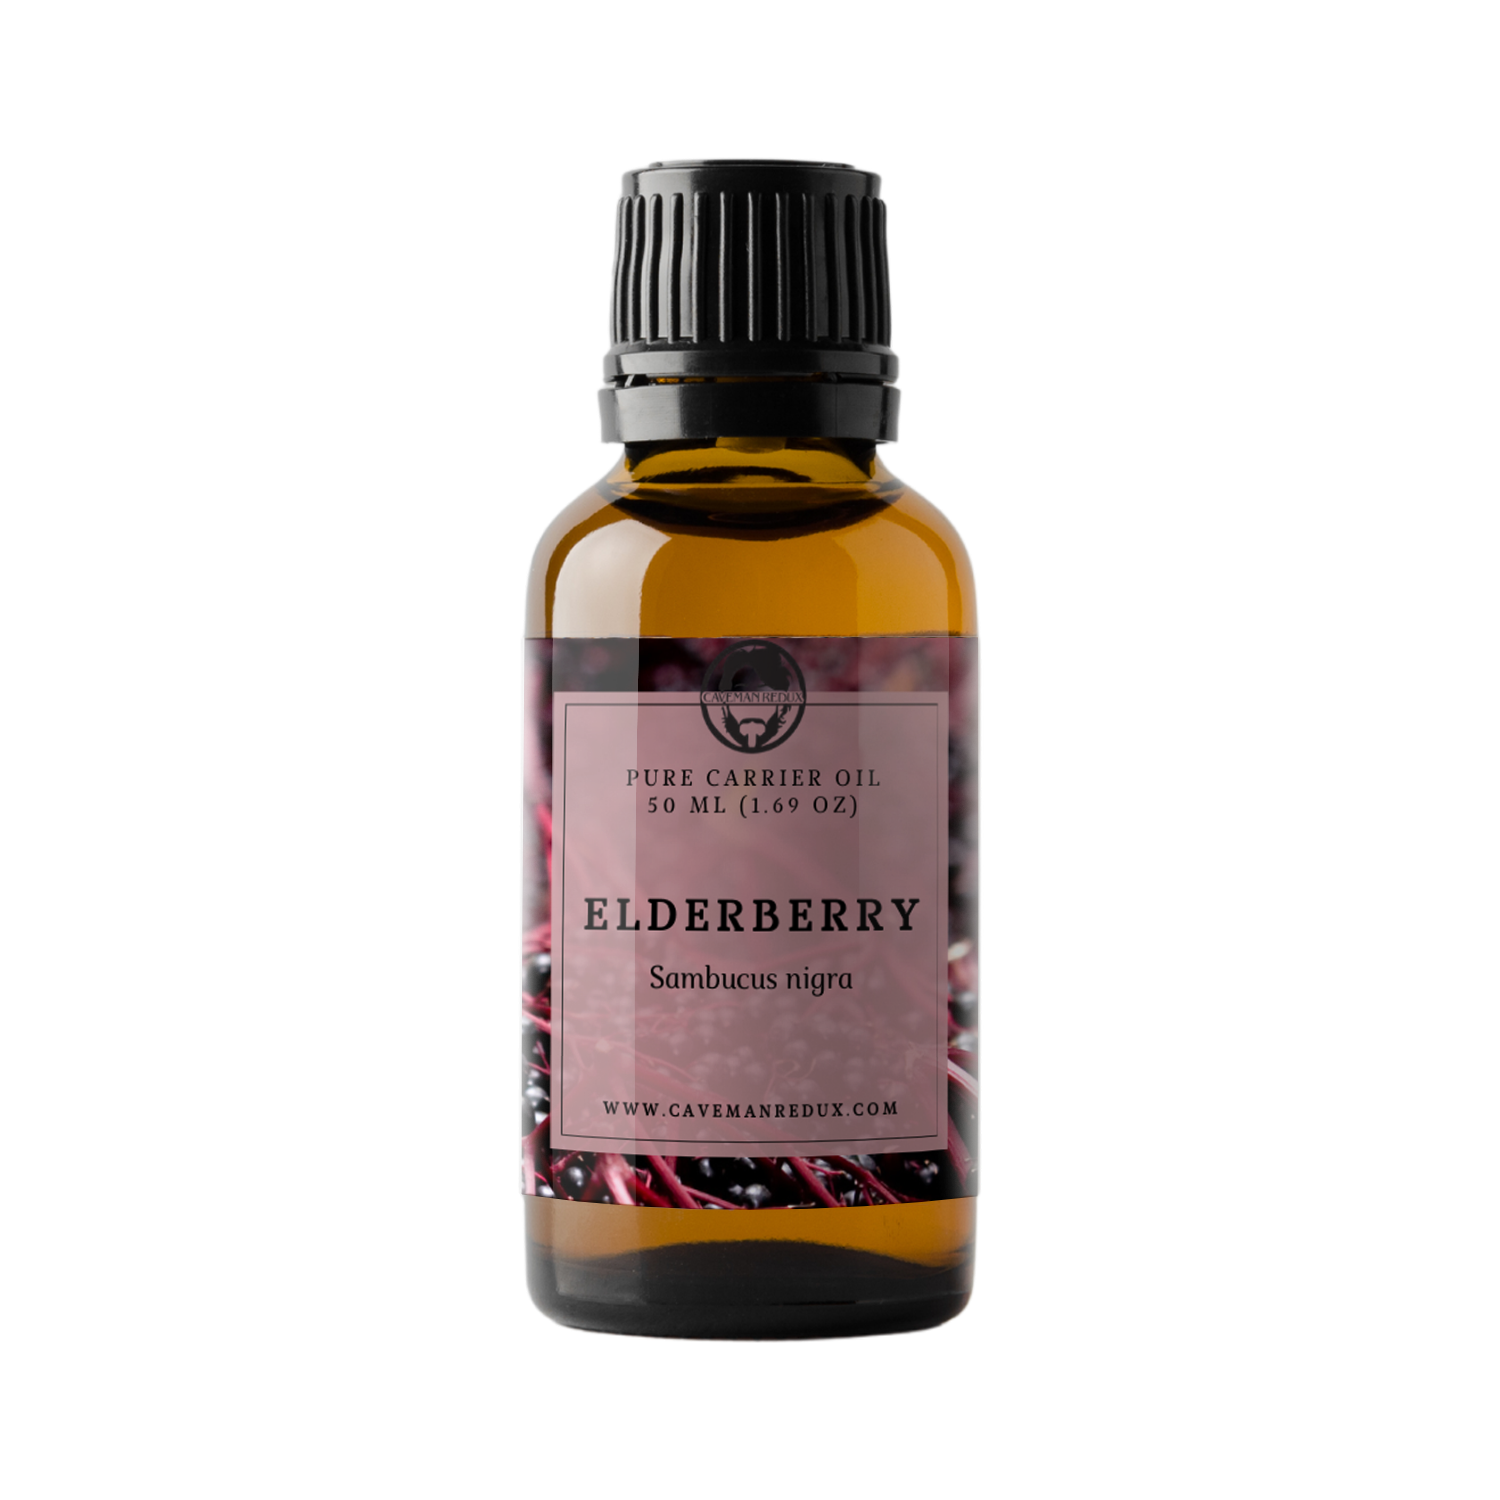 elderberry seed oil